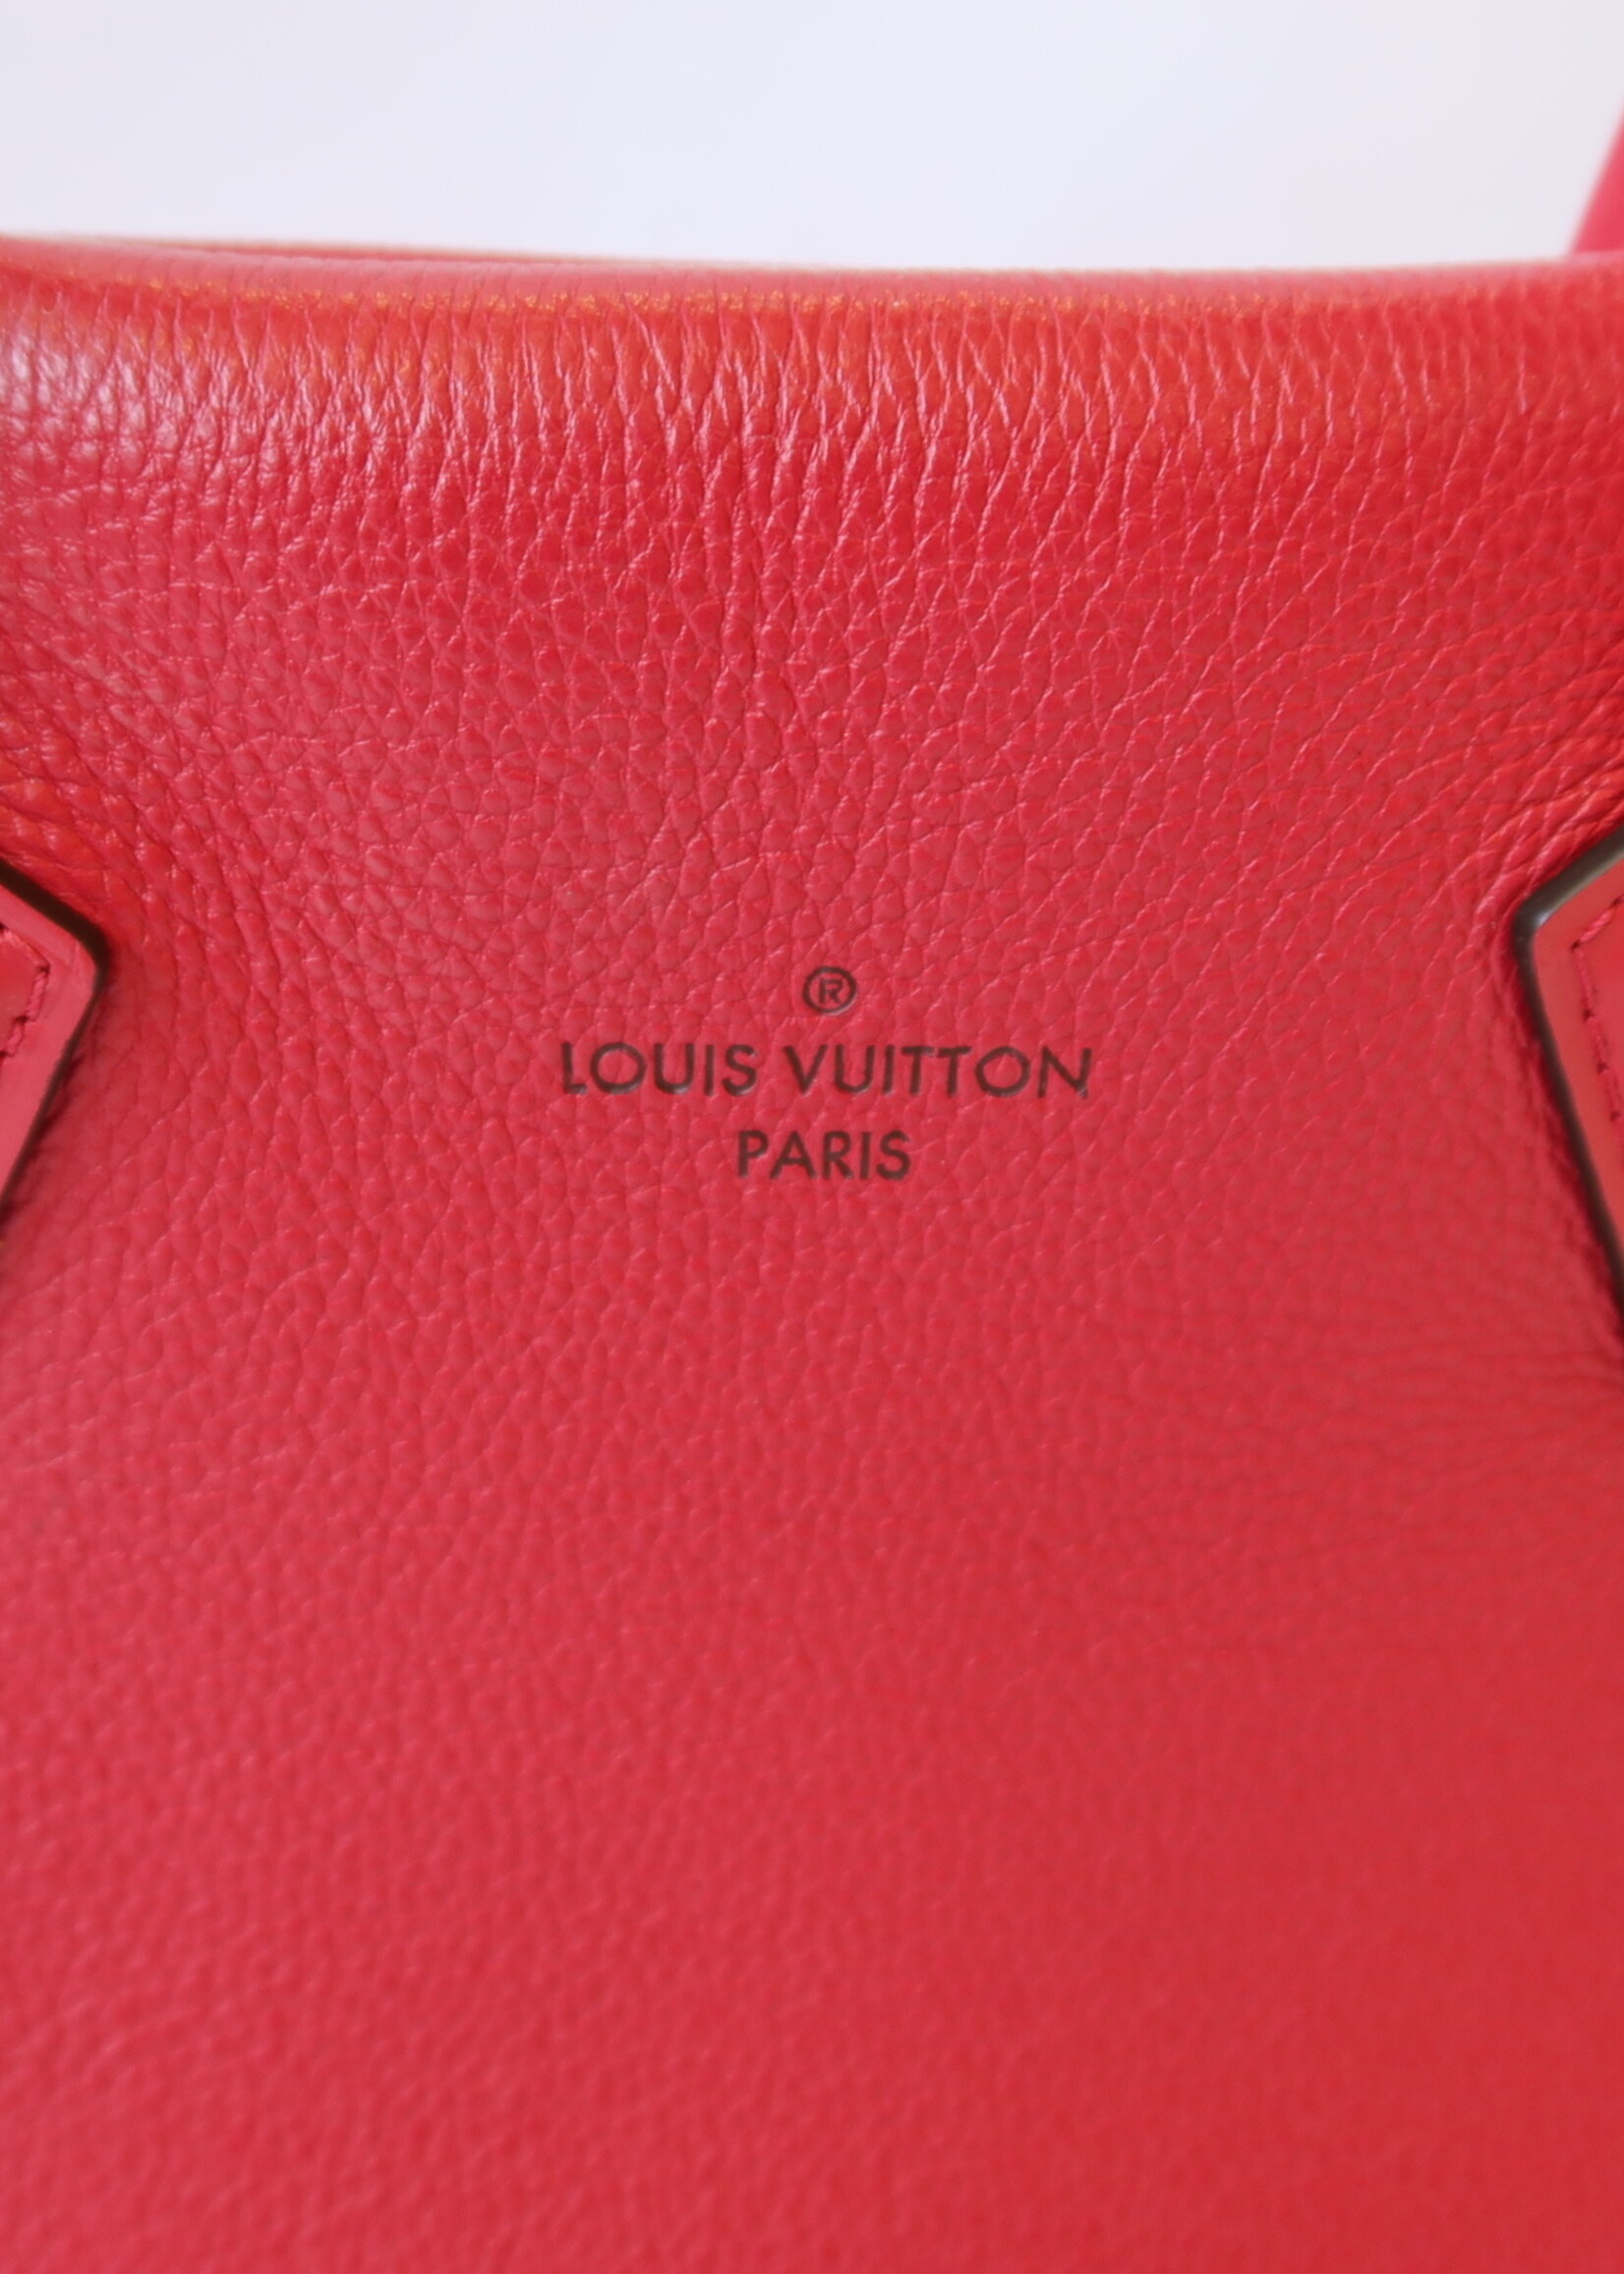 Louis Vuitton Louis Vuitton W Tote Cachemire Calfskin PM